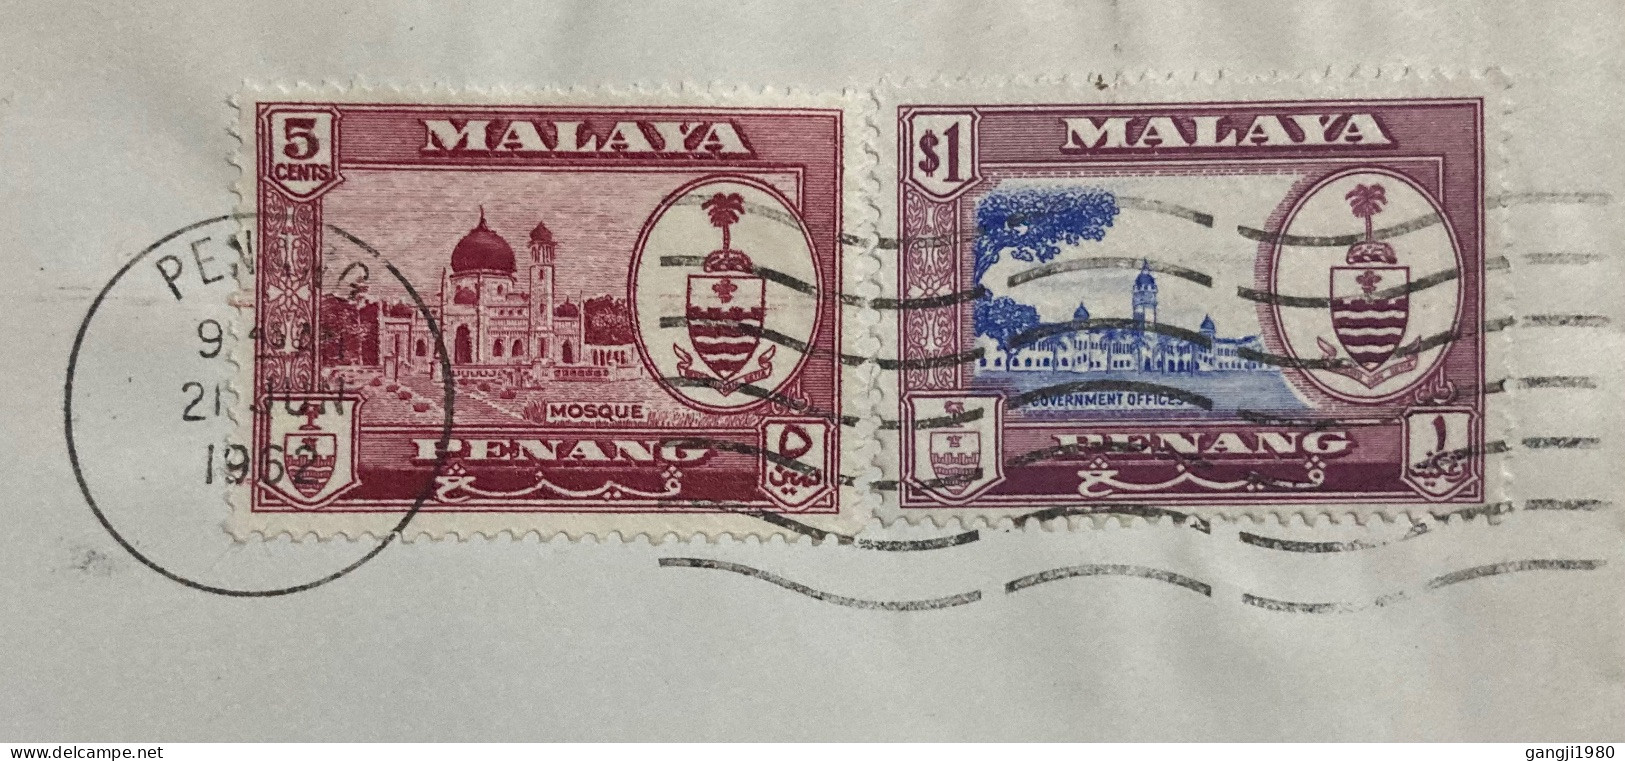 MALAYA-PENANG 1962, COVER USED TO USA, MOSQUE & GOVERNMENT OFFICE 2 STAMP, PENANG CITY CANCEL. - Malaya (British Military Administration)